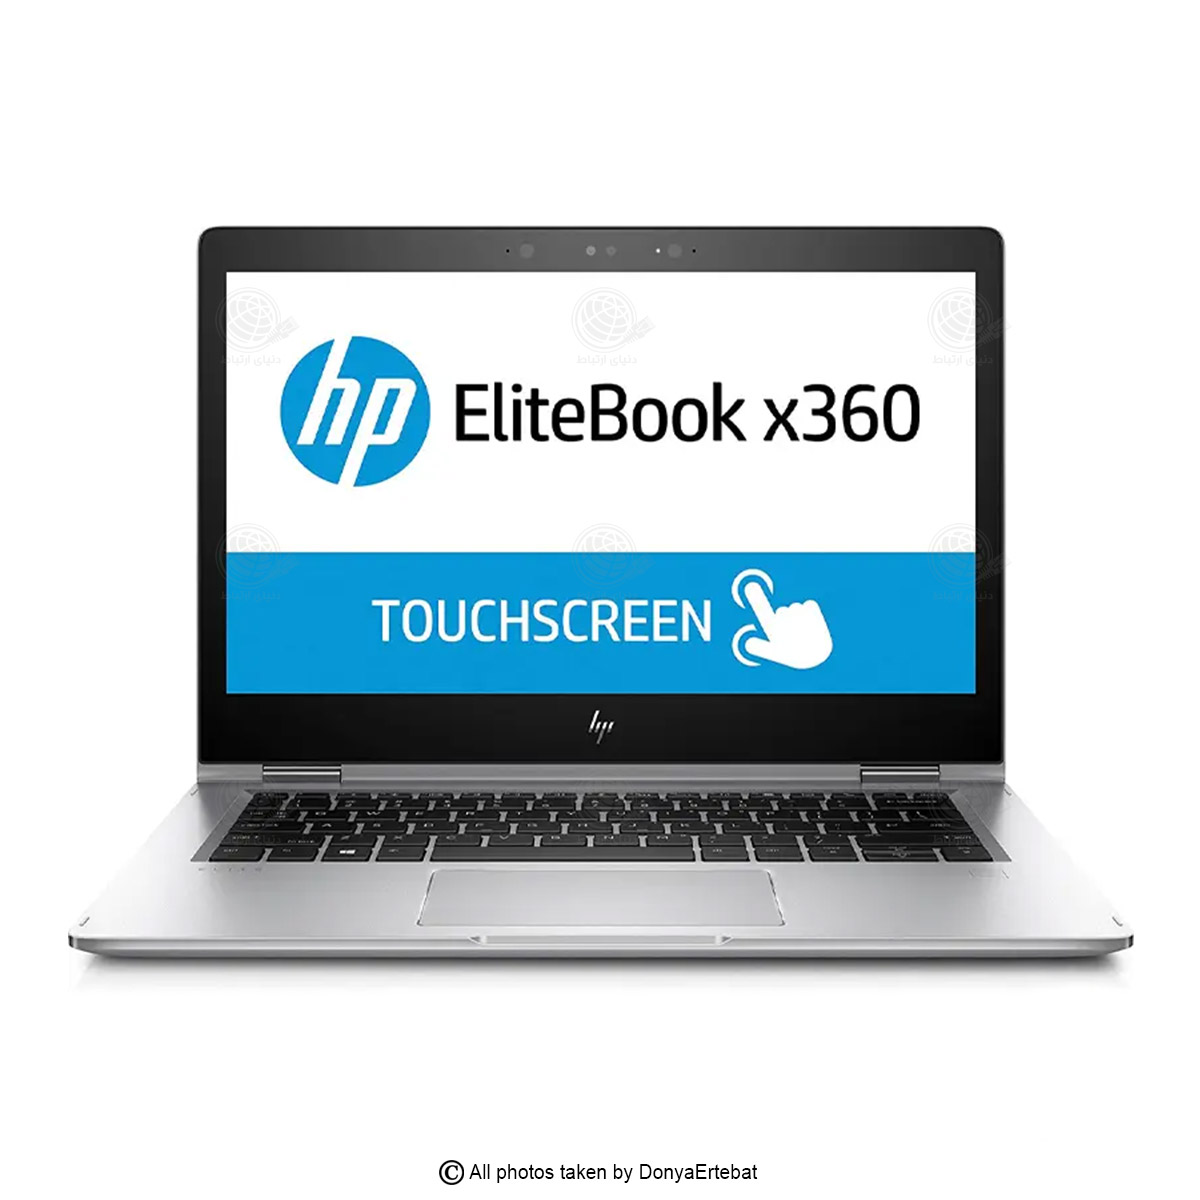 EliteBook x360 1030 G2